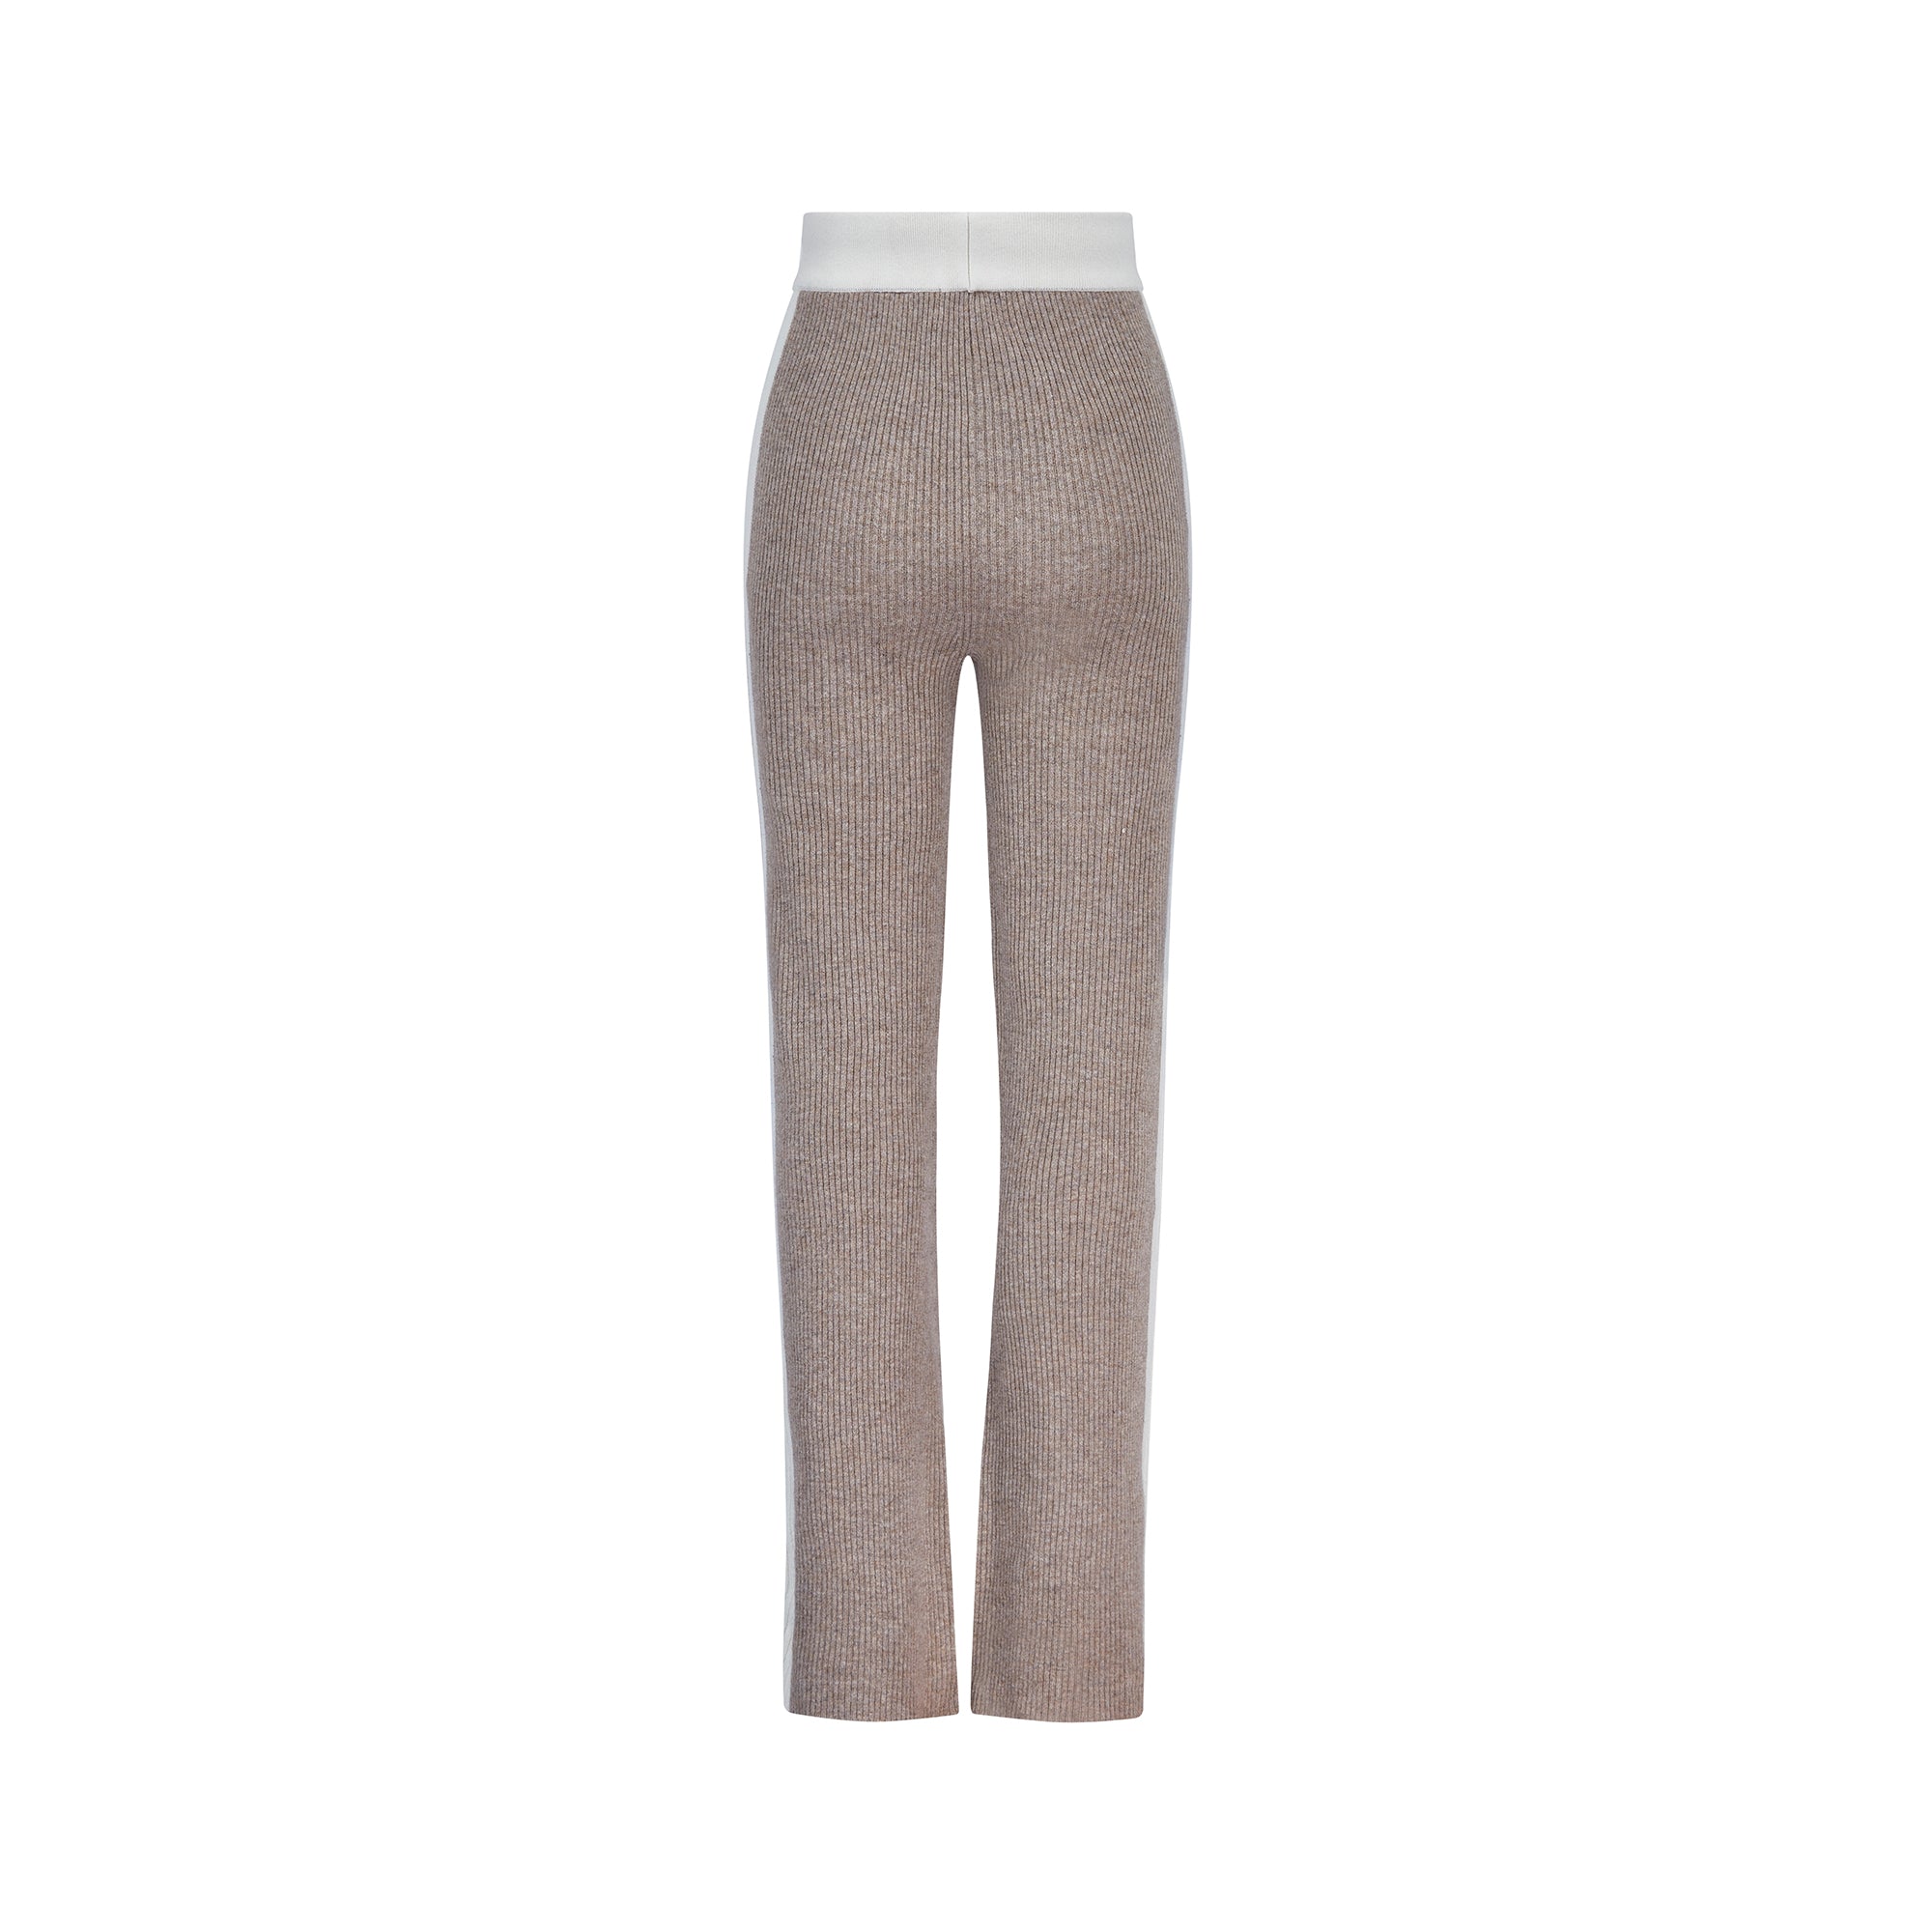 Wide Leg Cashmere Pants - Oat / White